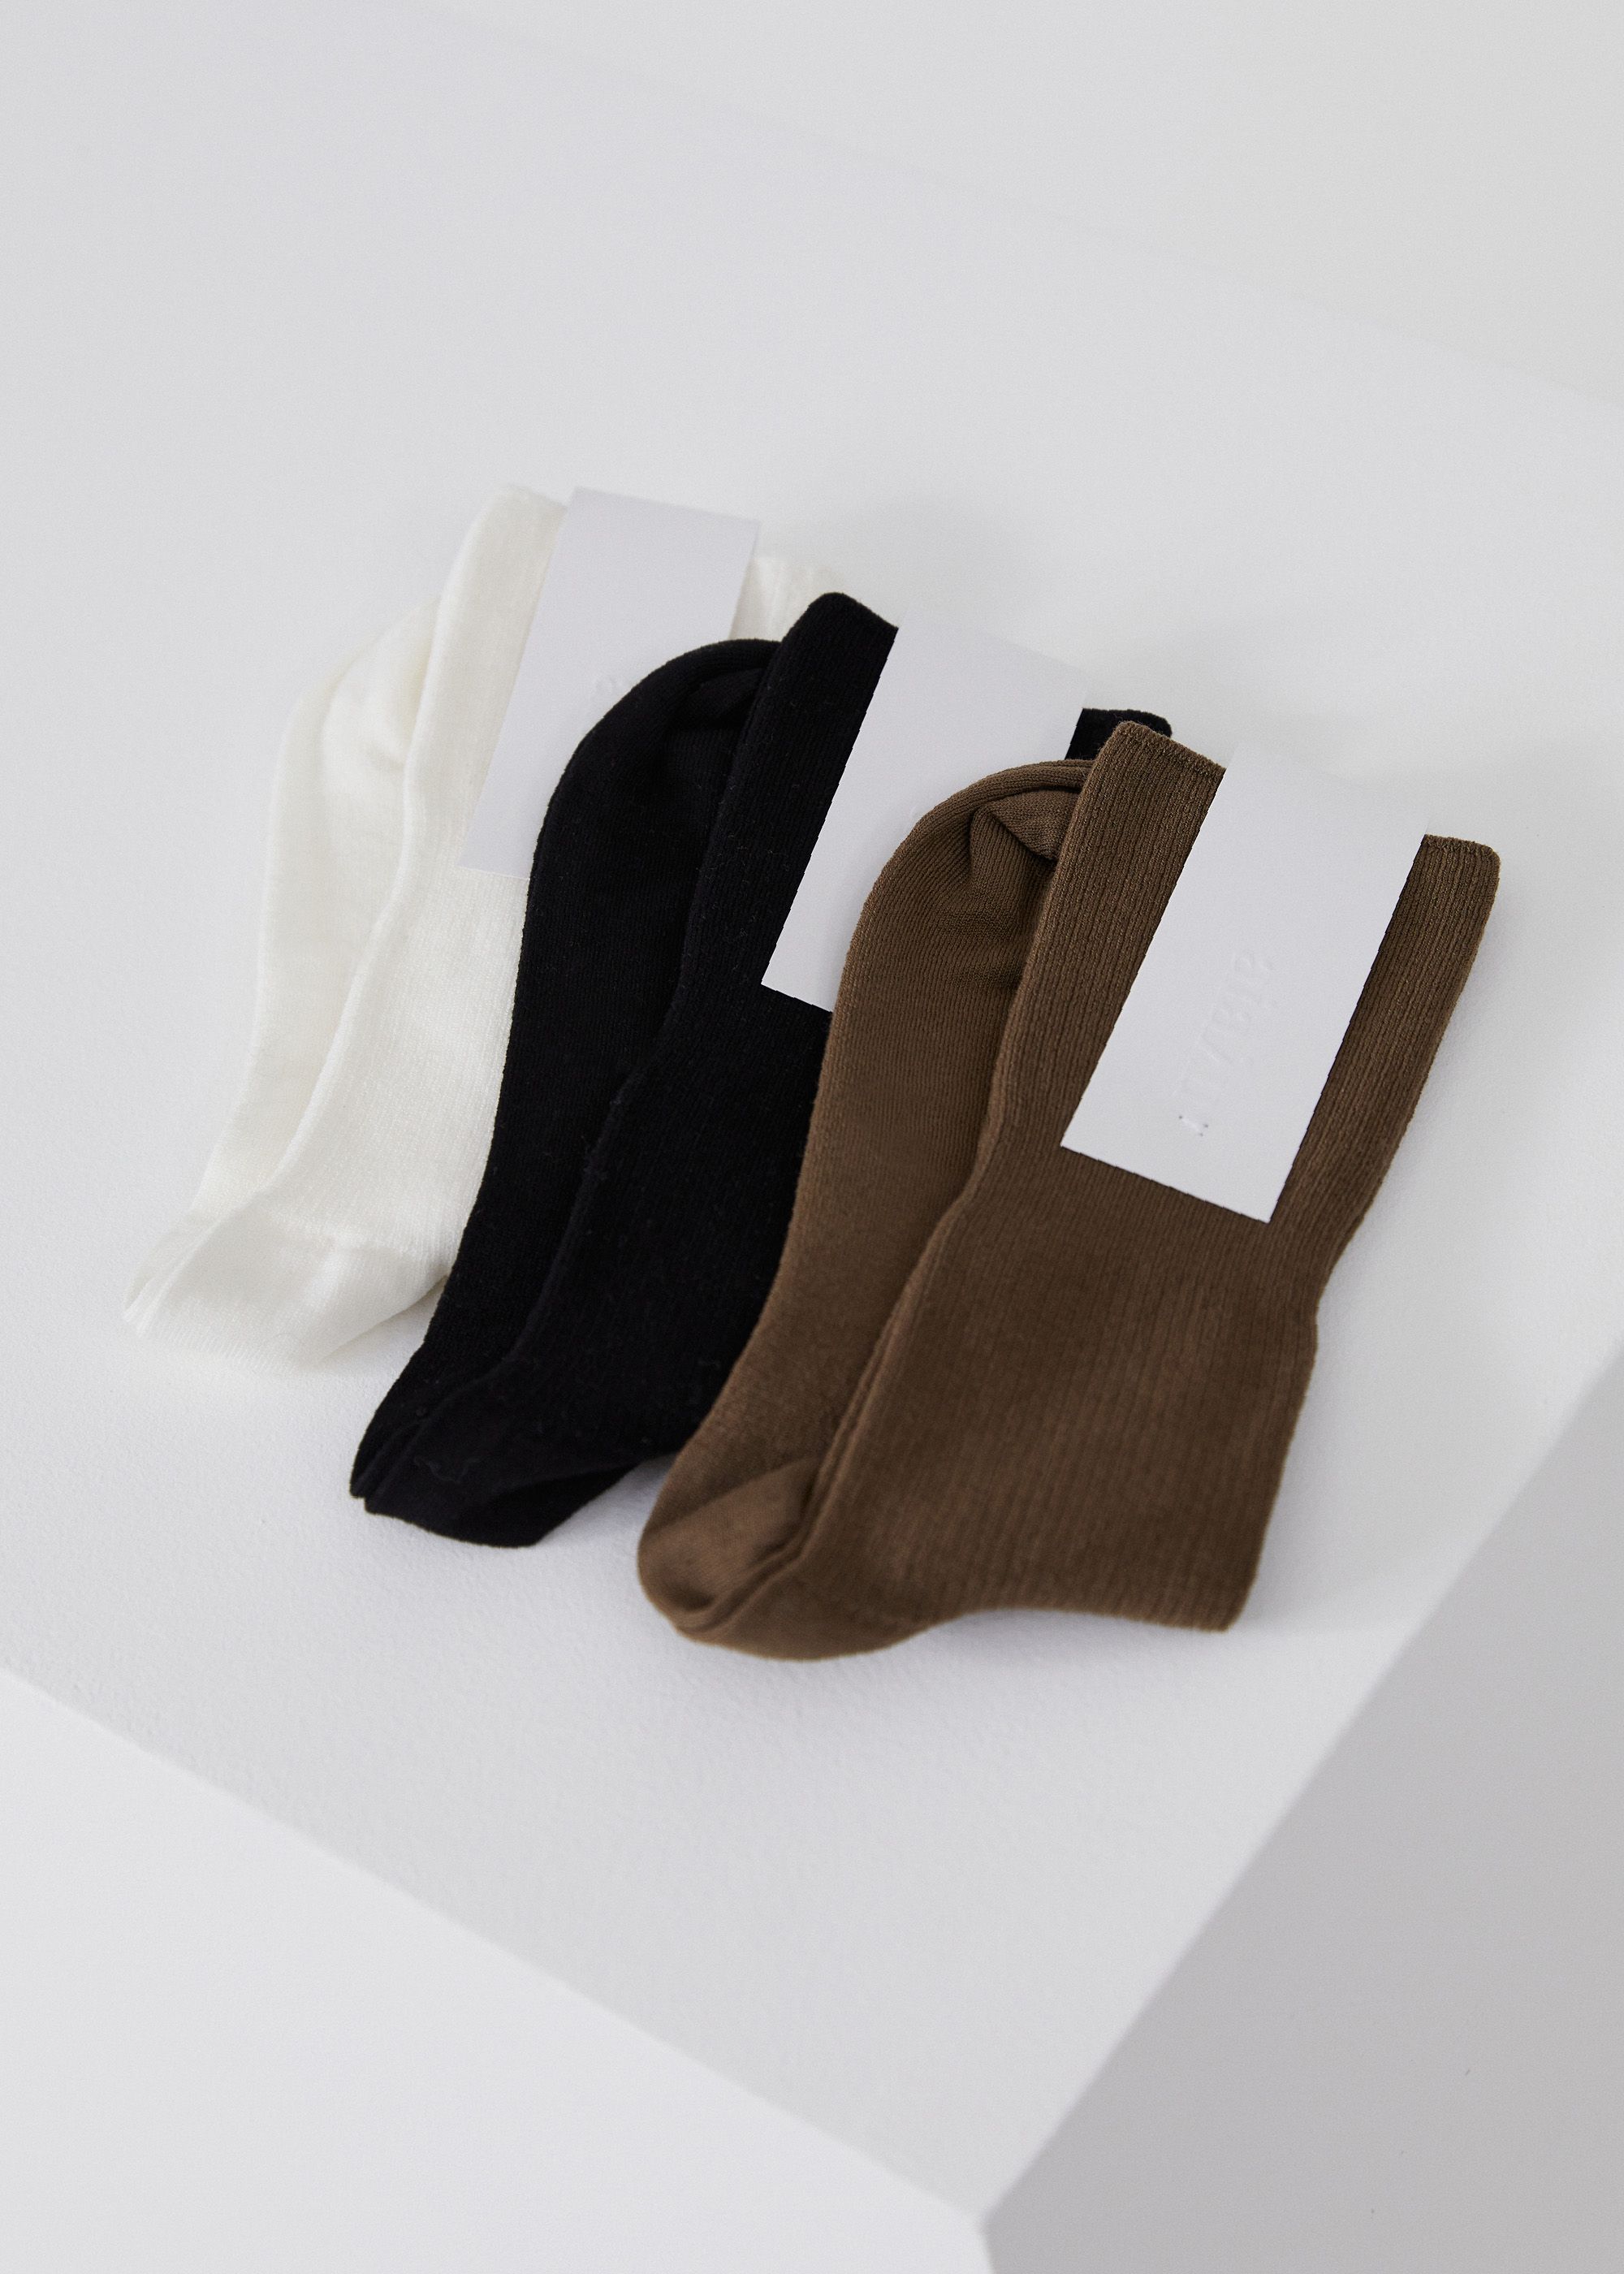 Socks - Cotton Rib Socks